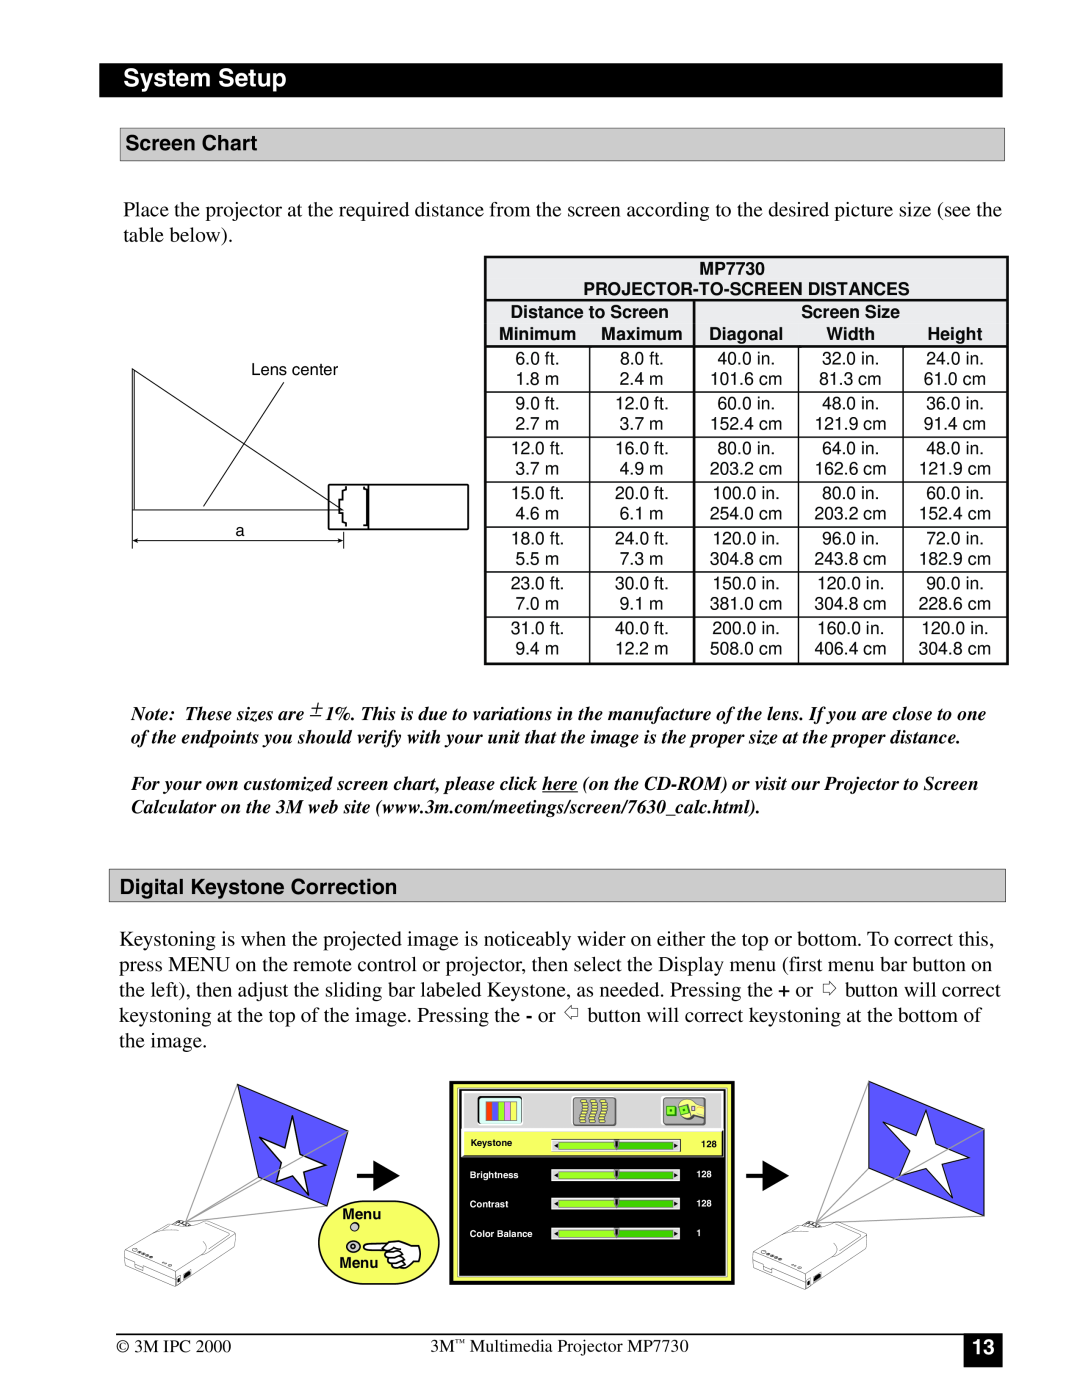 3M MP7730 manual System Setup, Screen Chart, Digital Keystone Correction 